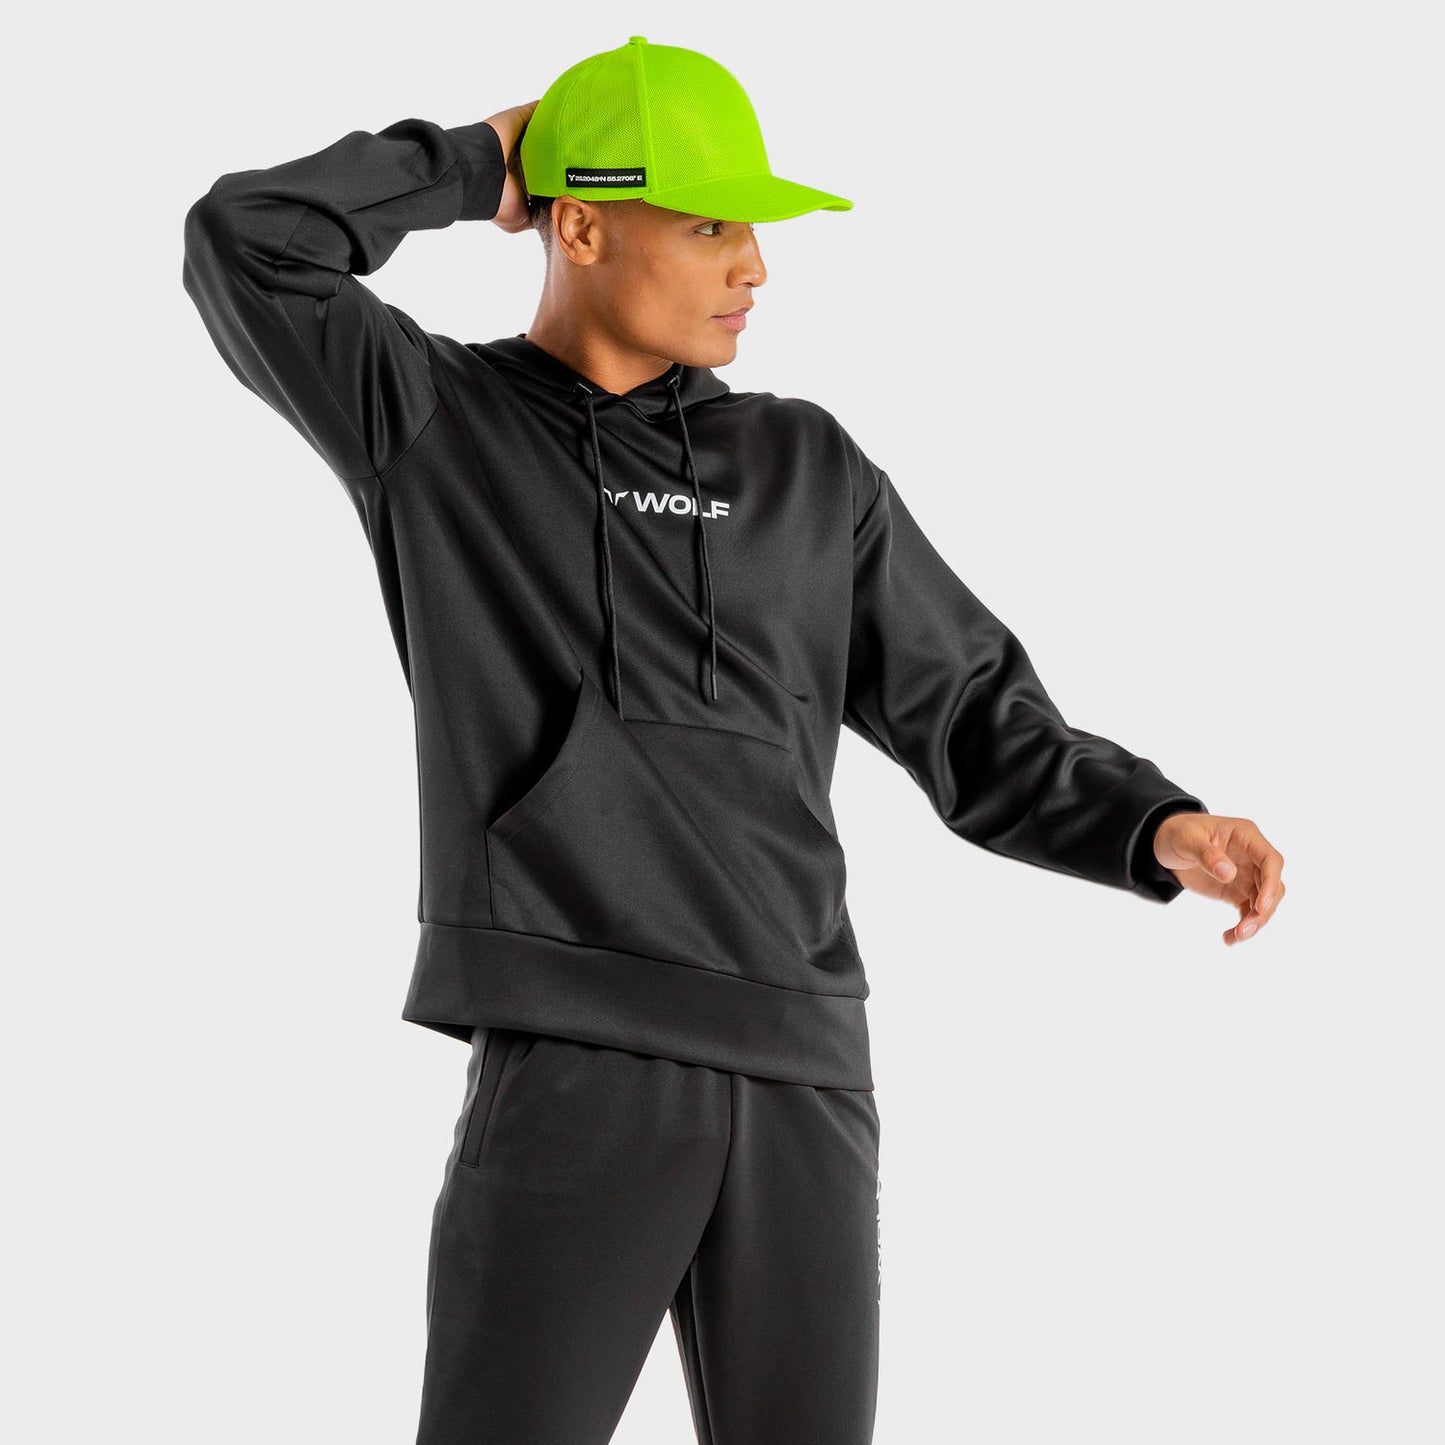 squatwolf-workout-cap-for-men-primal-baseball-cap-neon-gym-wear